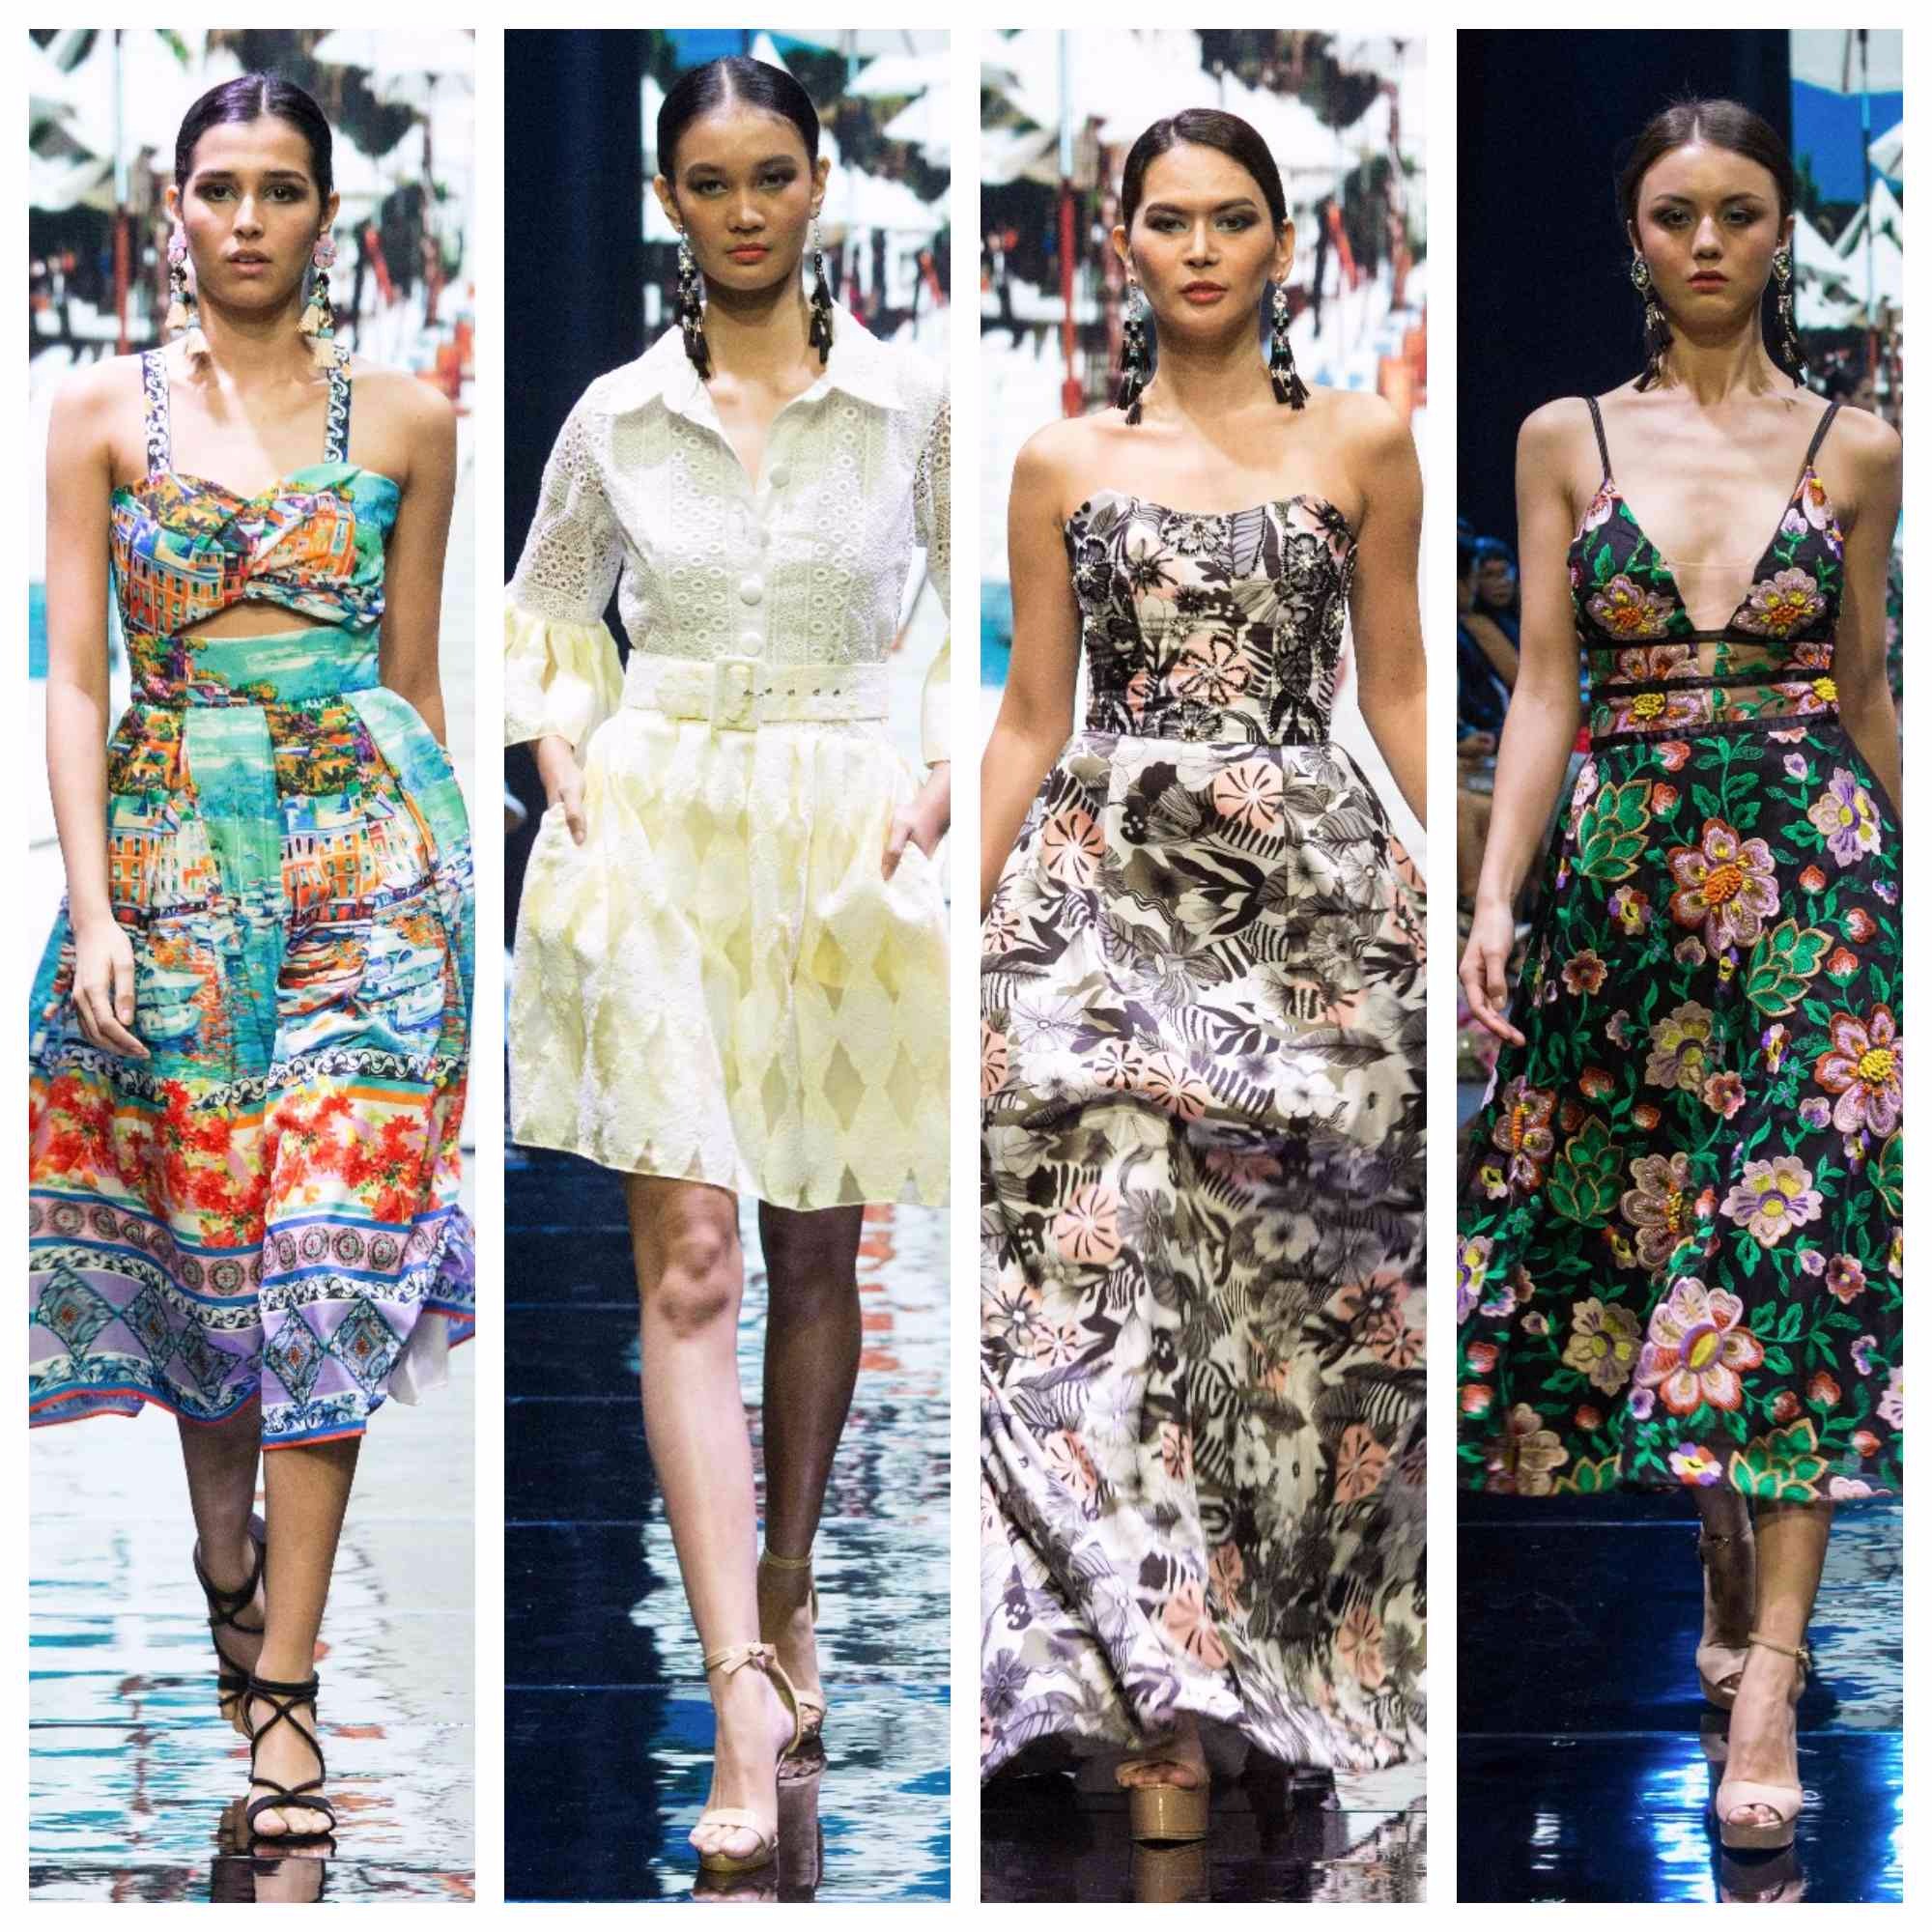 IN PHOTOS: Manila Fashion Festival Days 1 & 2 - PeopleAsia